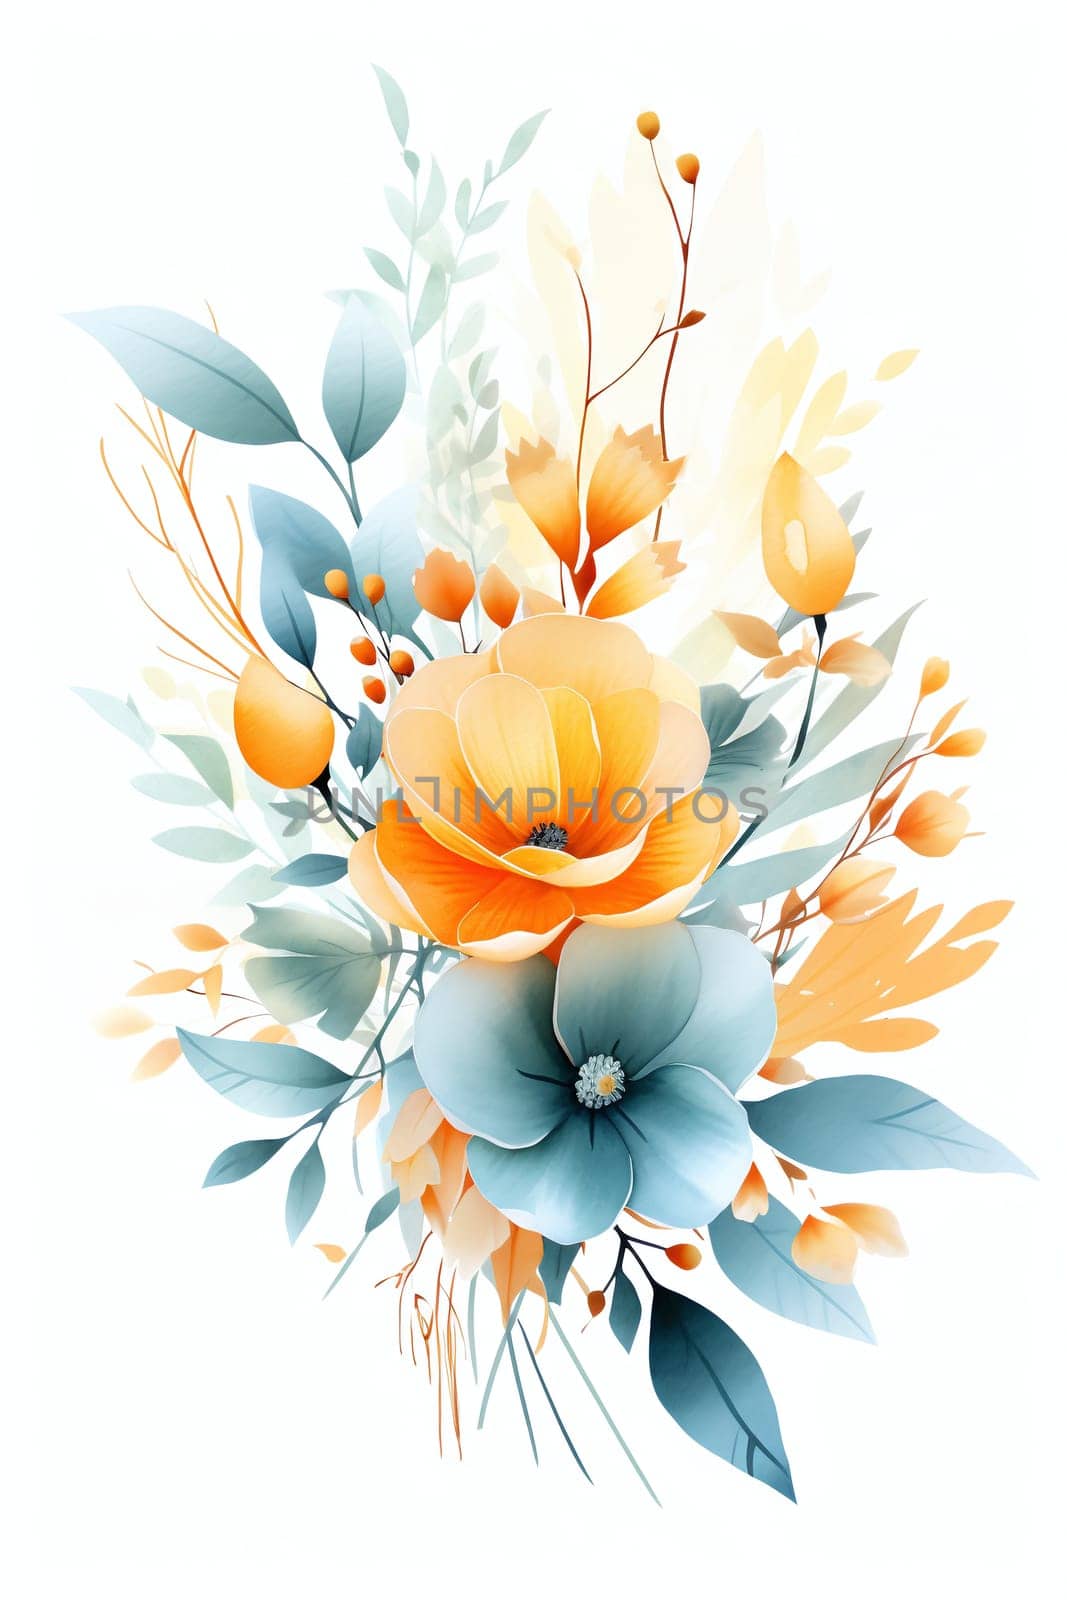 Elegant Floral Arrangement With Autumn Colors by chrisroll